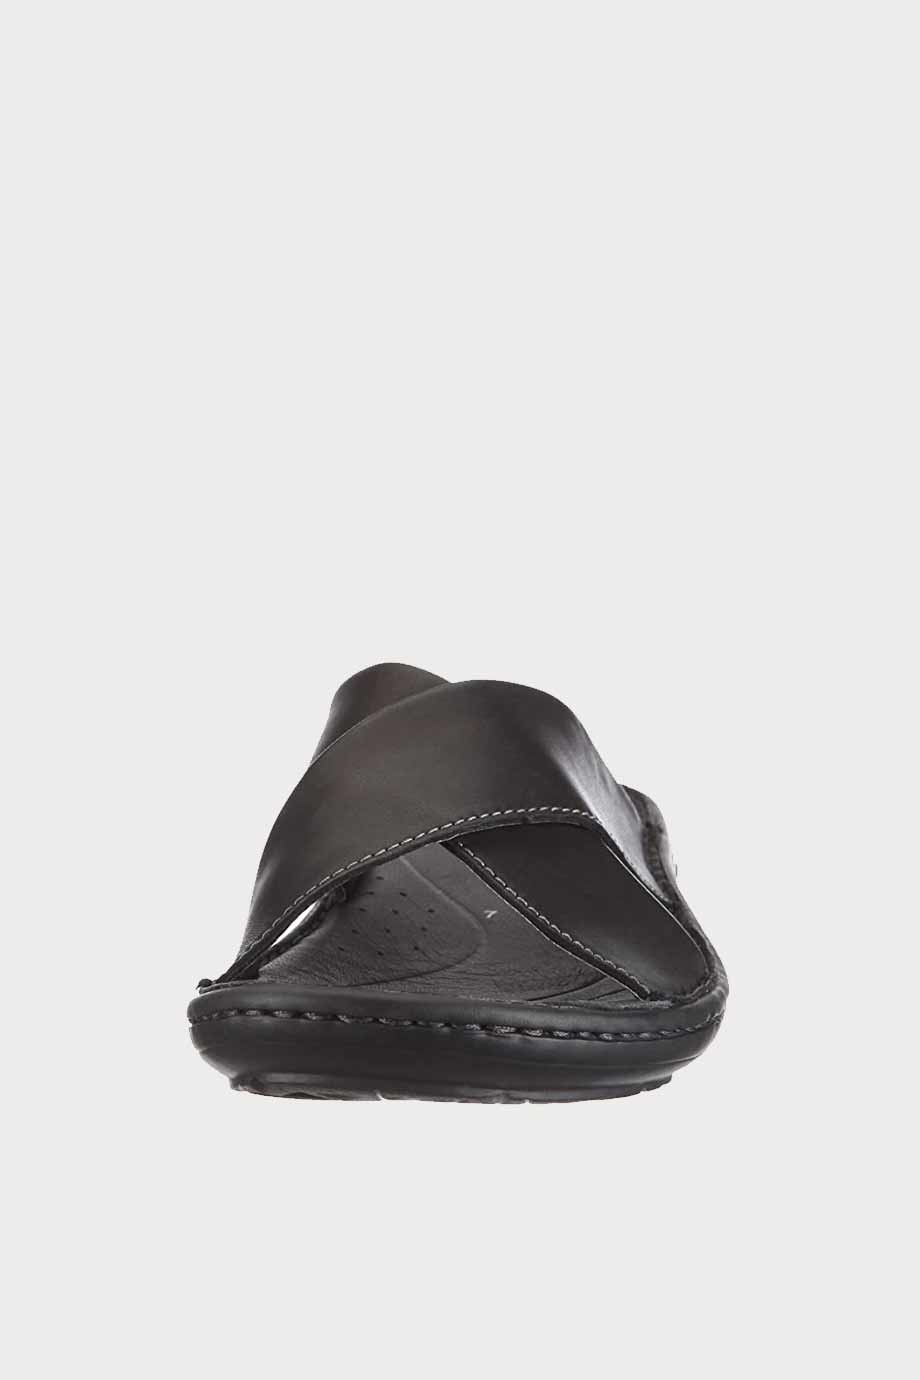 spiridoula metheniti shoes xalkida p Villa Sun clarks black leather 2